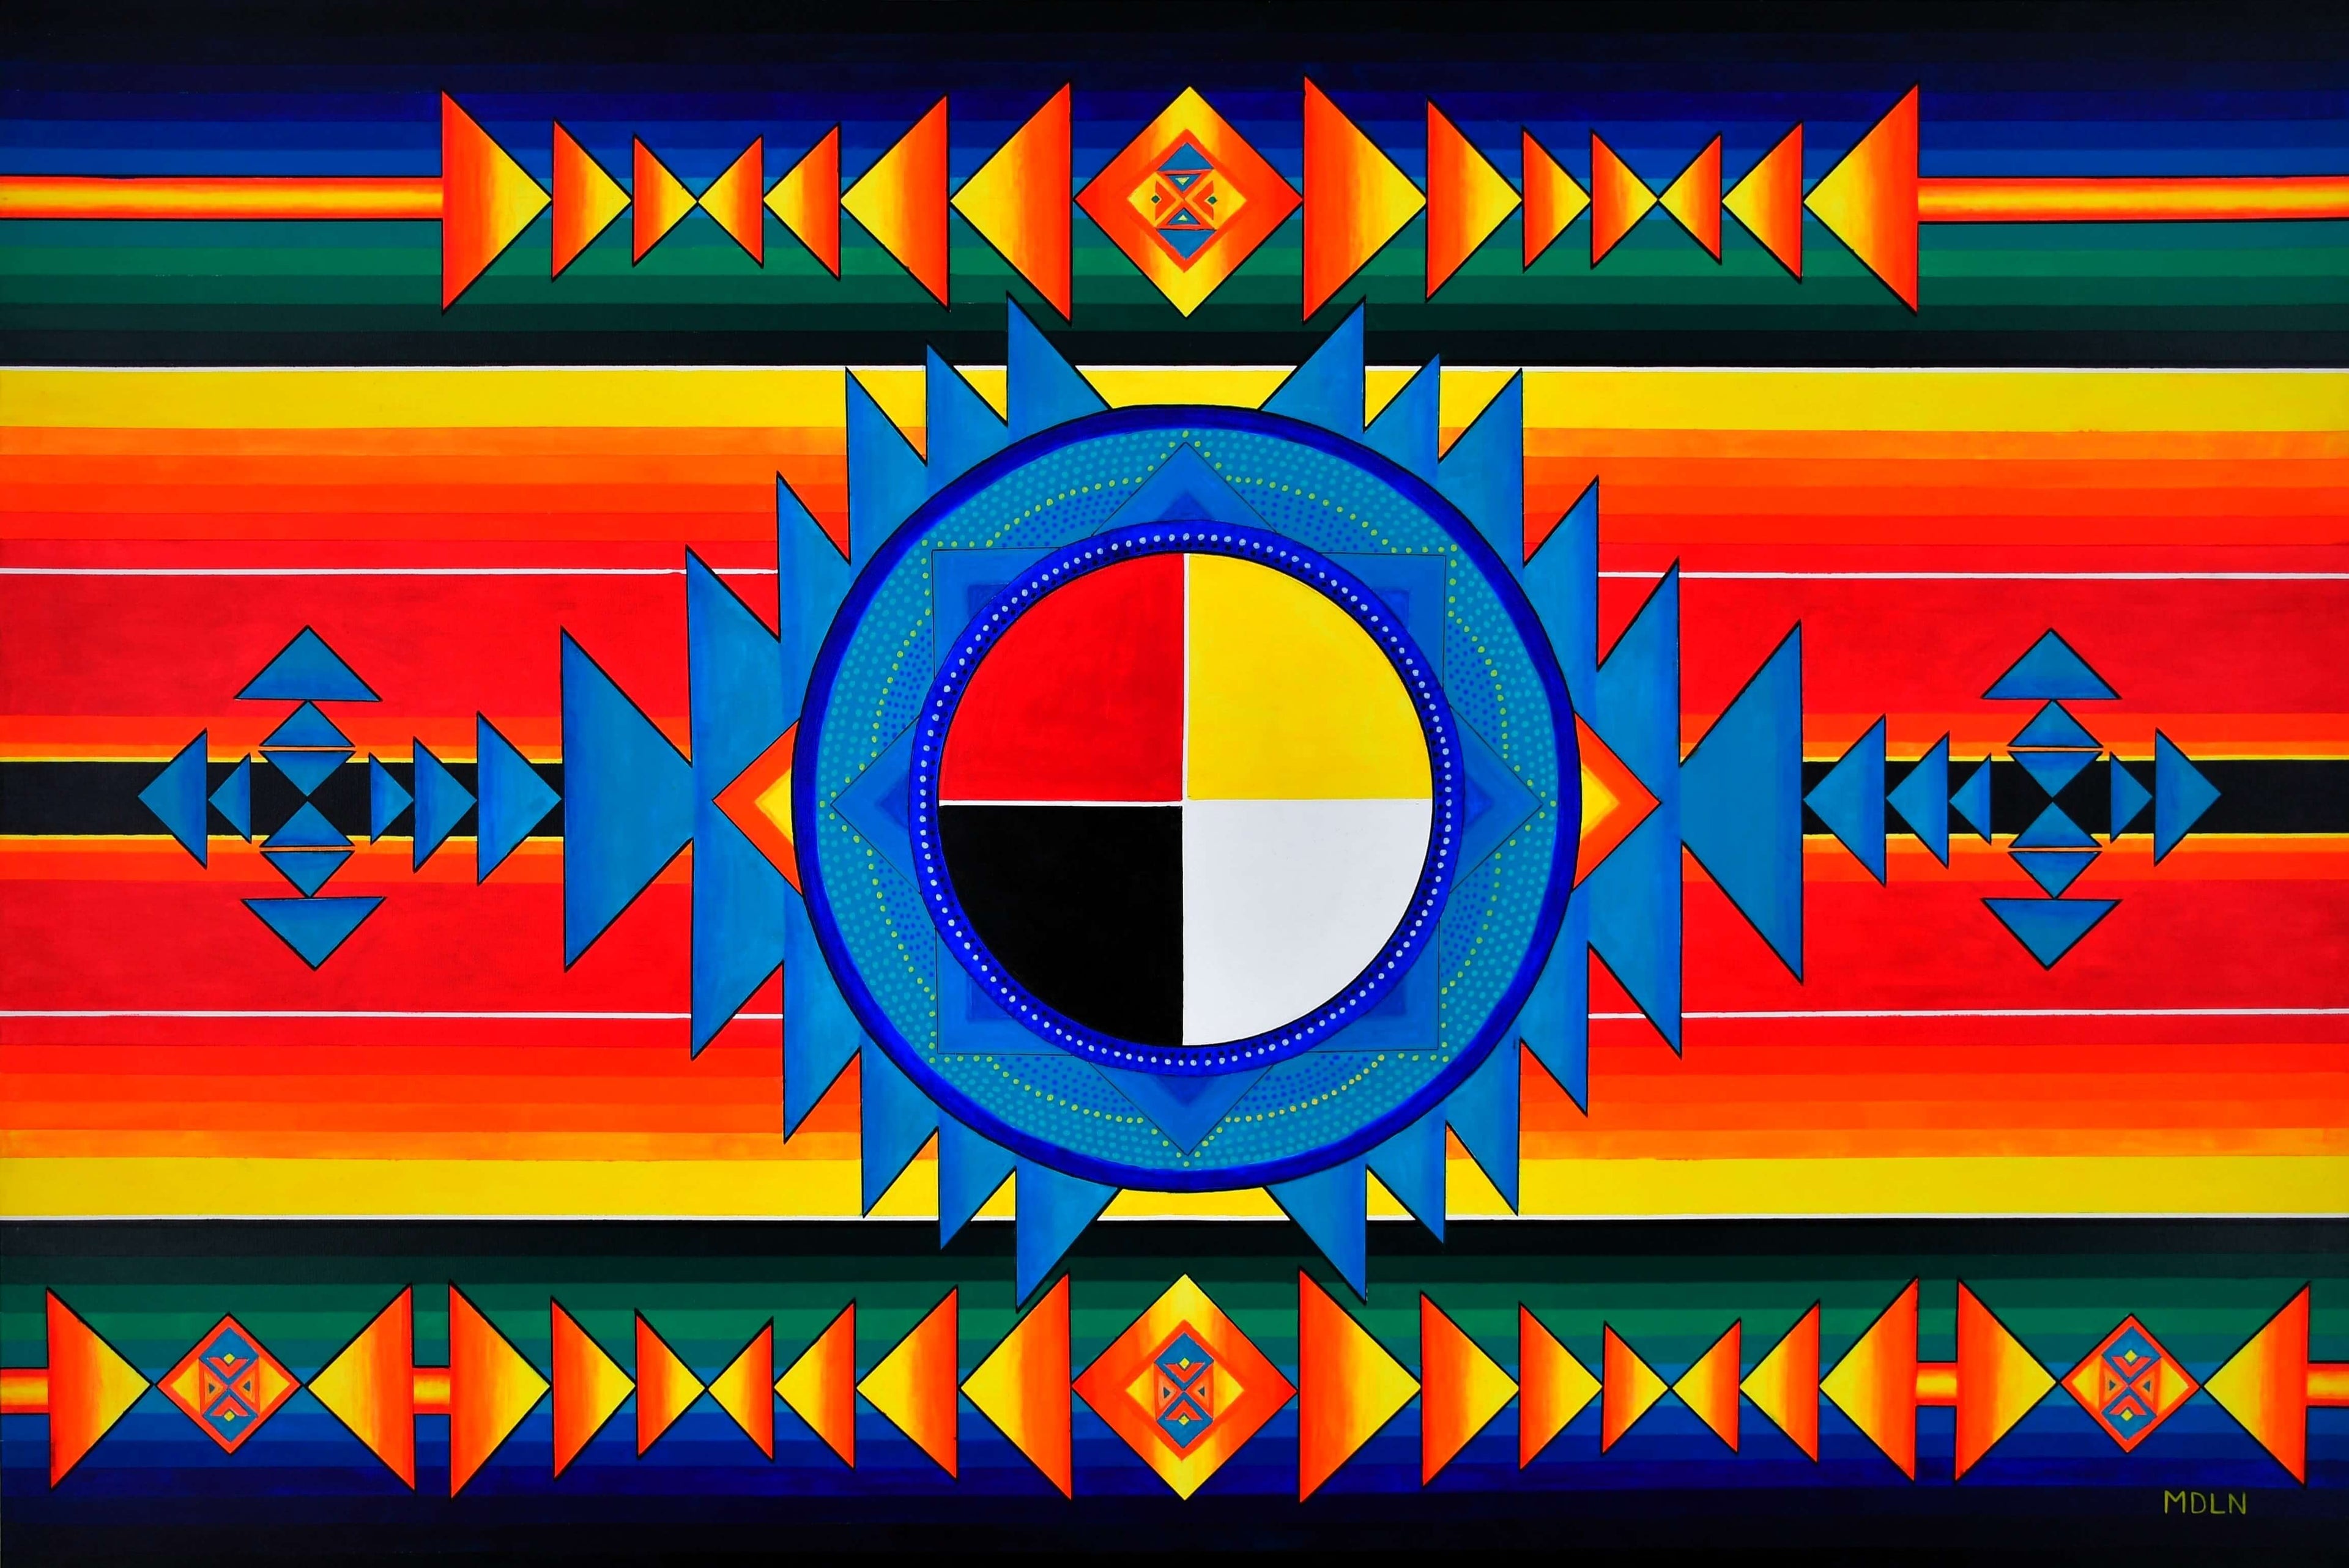 Original Acrylic Painting of Indigenous Medicine Wheel art in bright colors